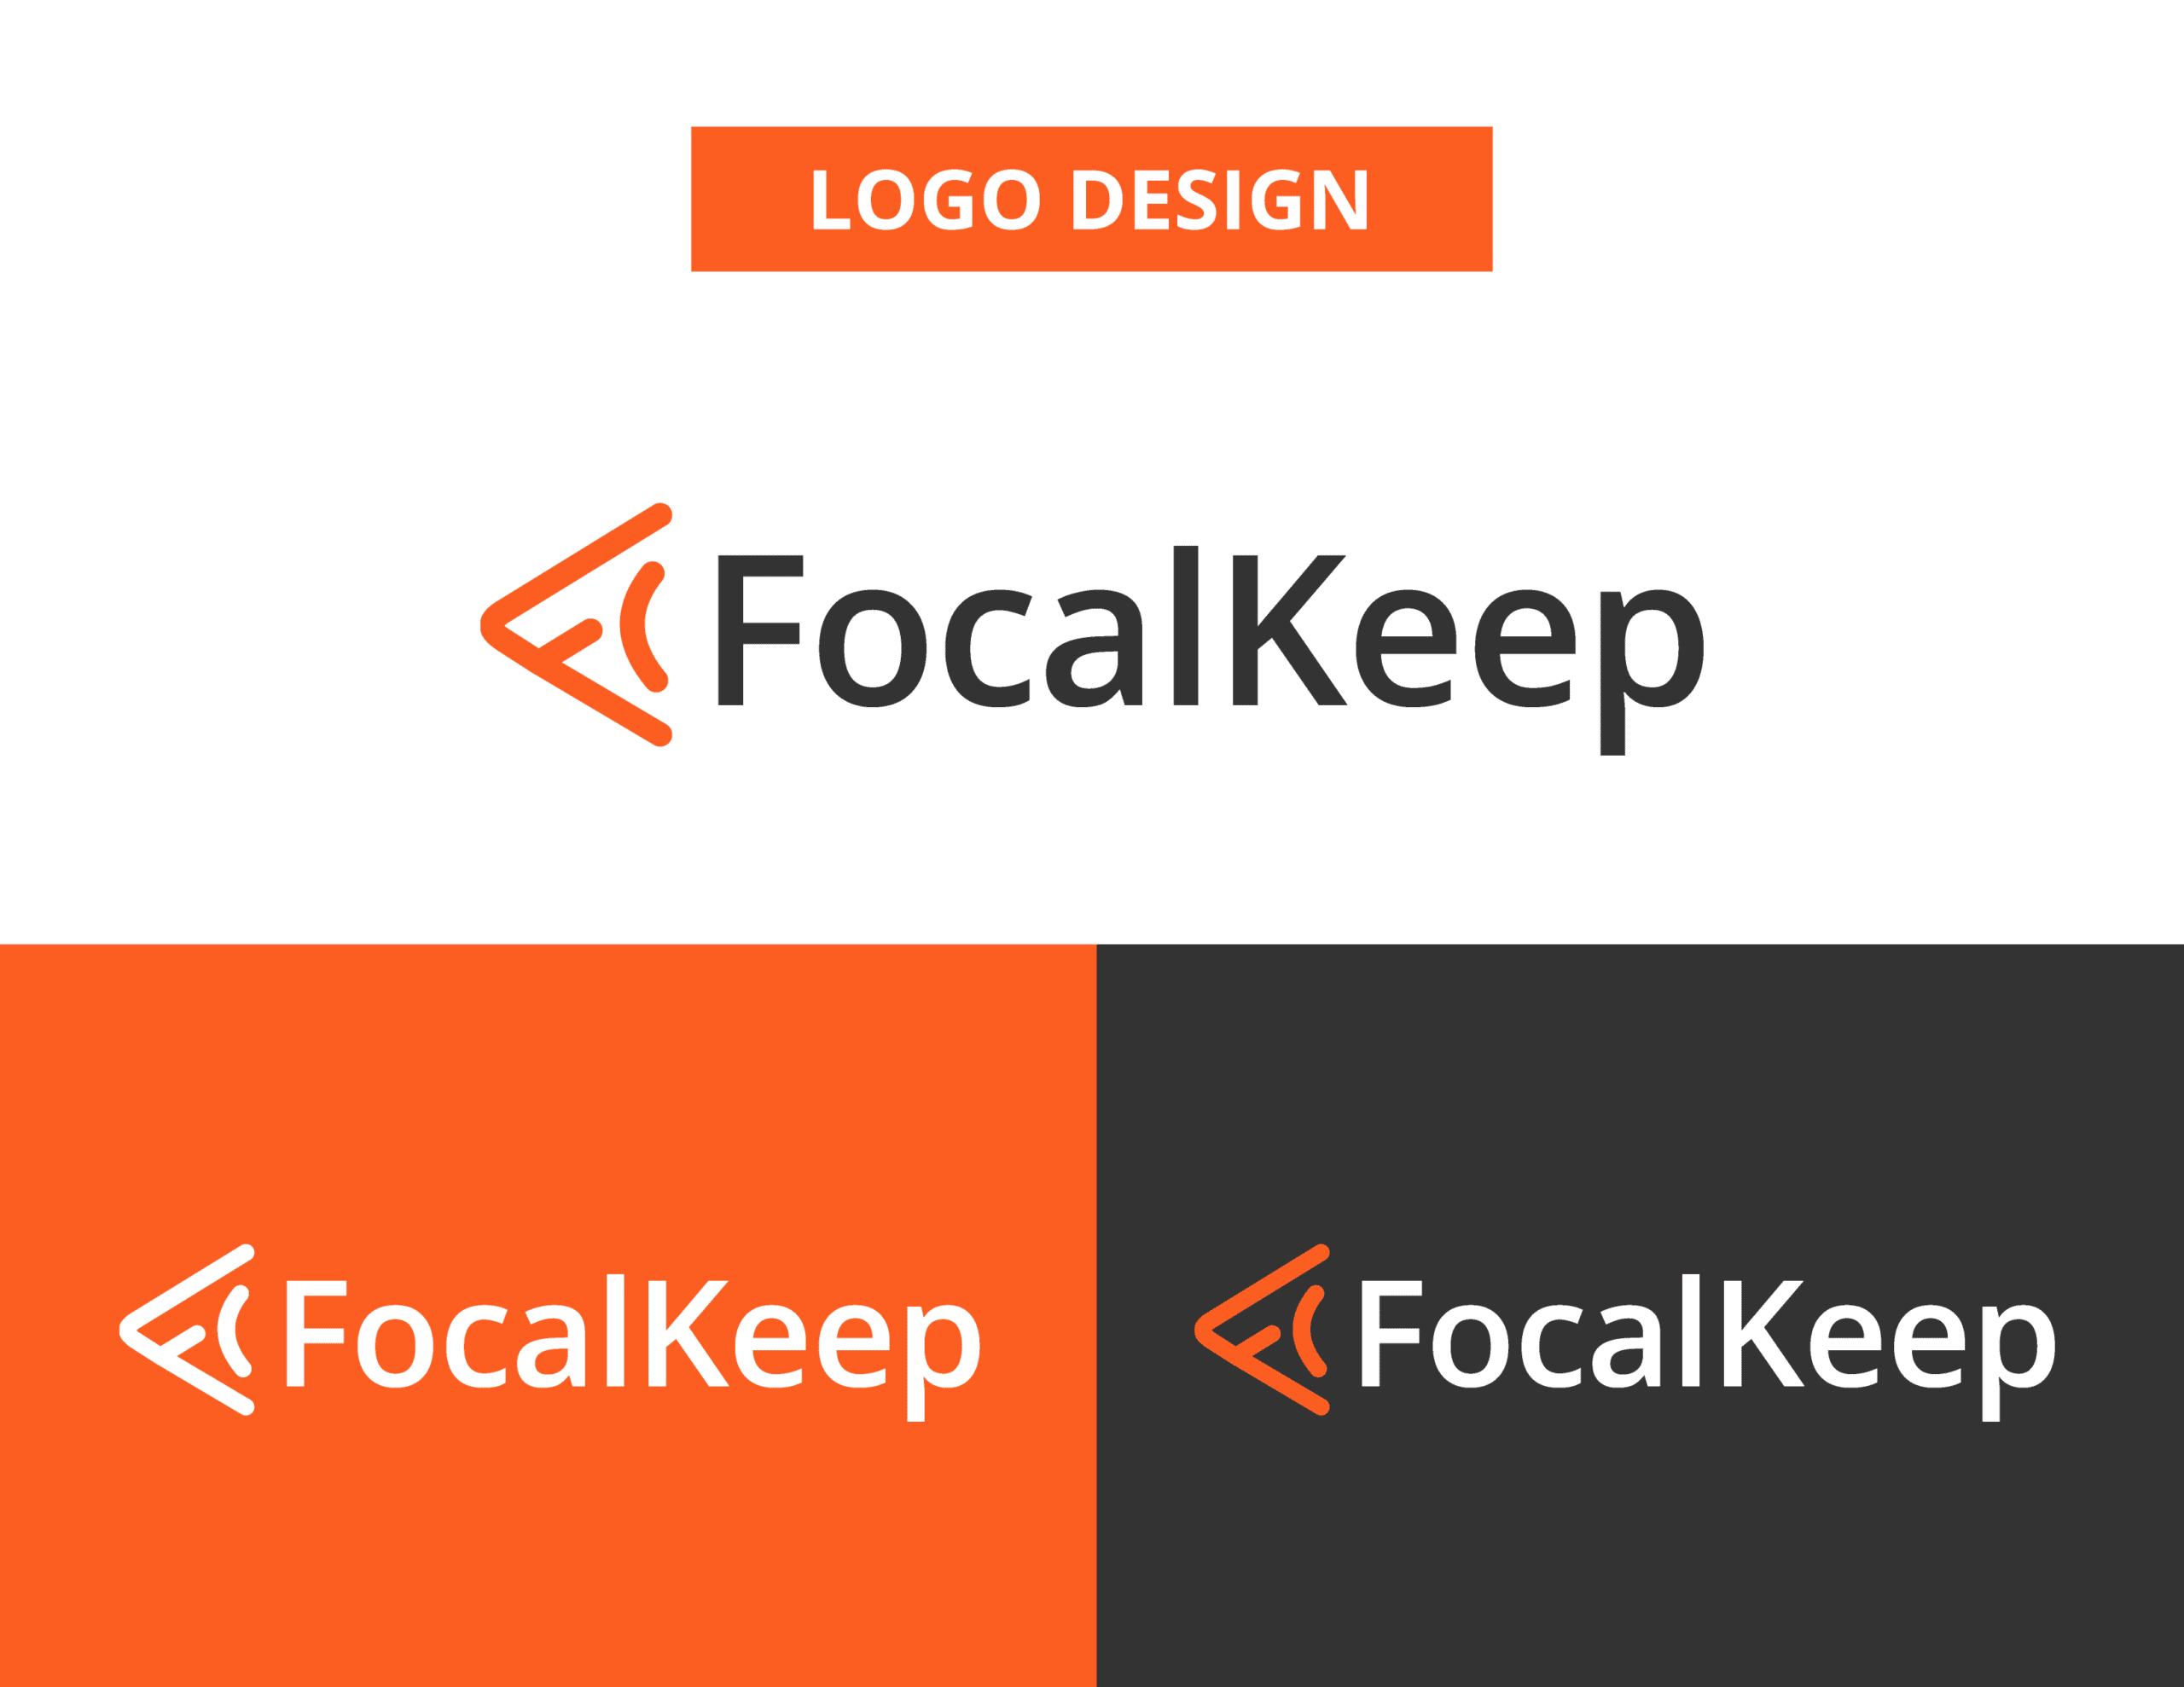 01Focal_Keep__Logo Design